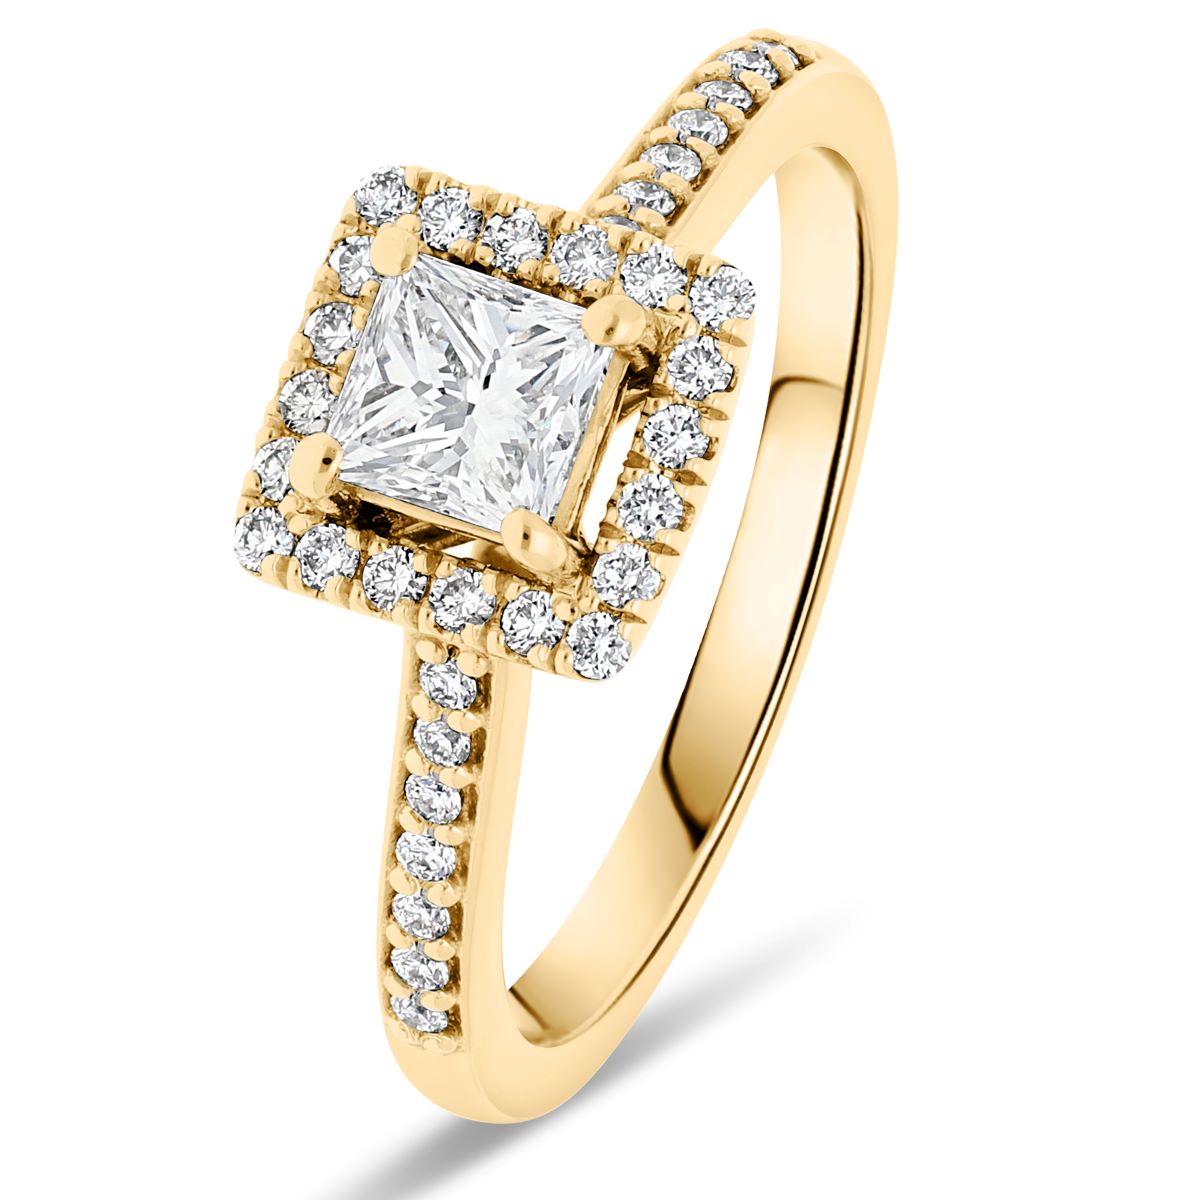 capri-solitaires-diamants-certifies-accompagne-or-jaune-750-